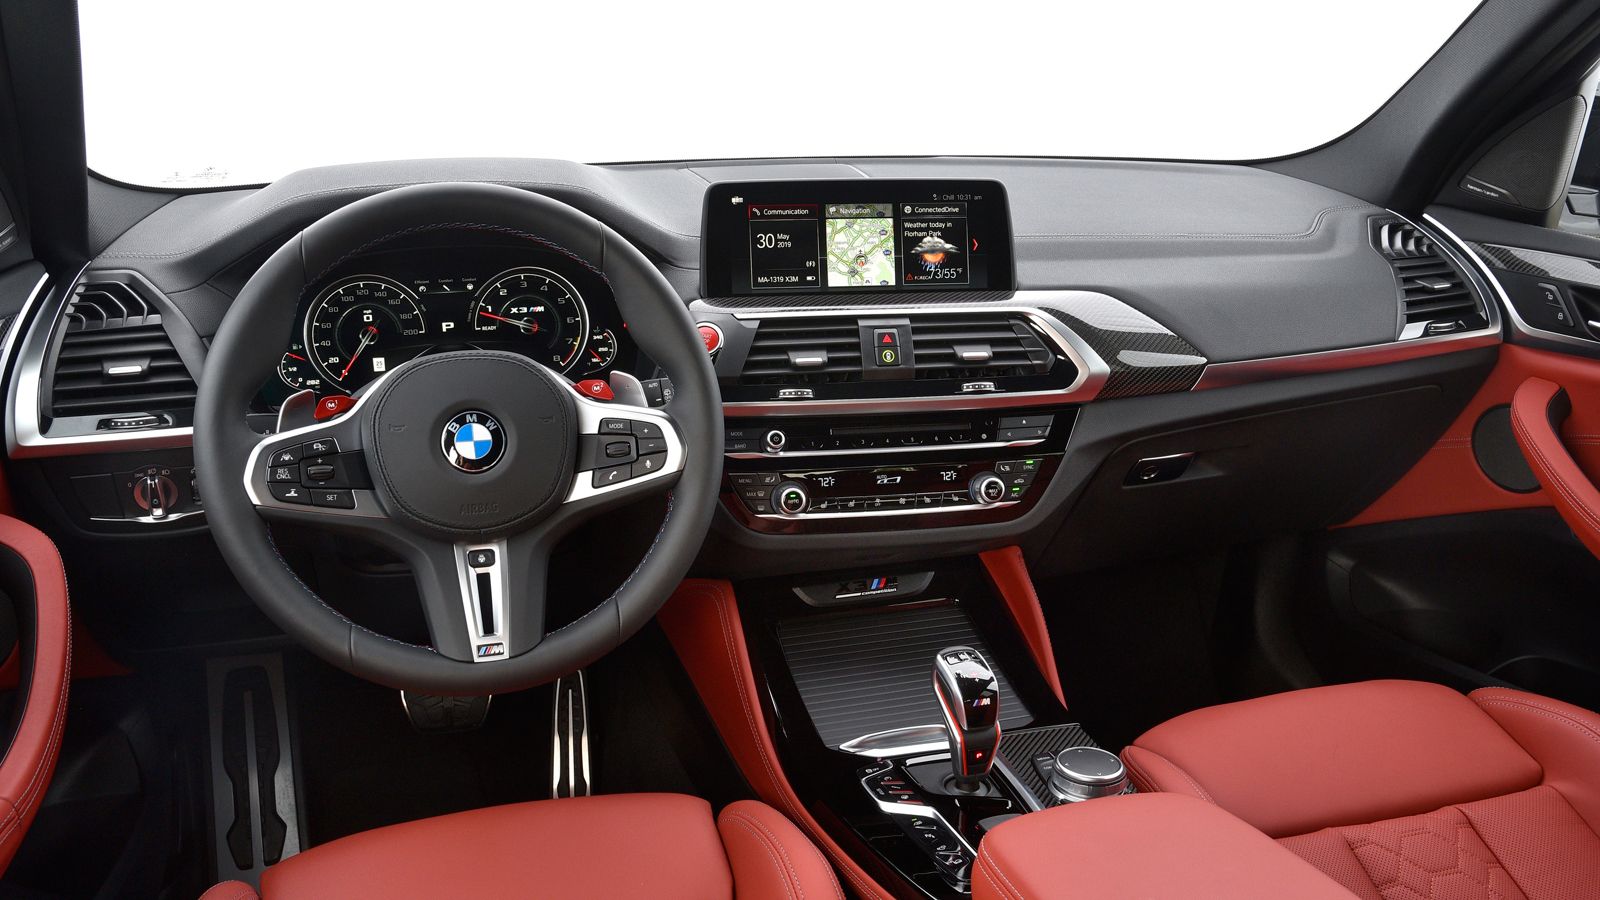 2020 BMW X3 M interior